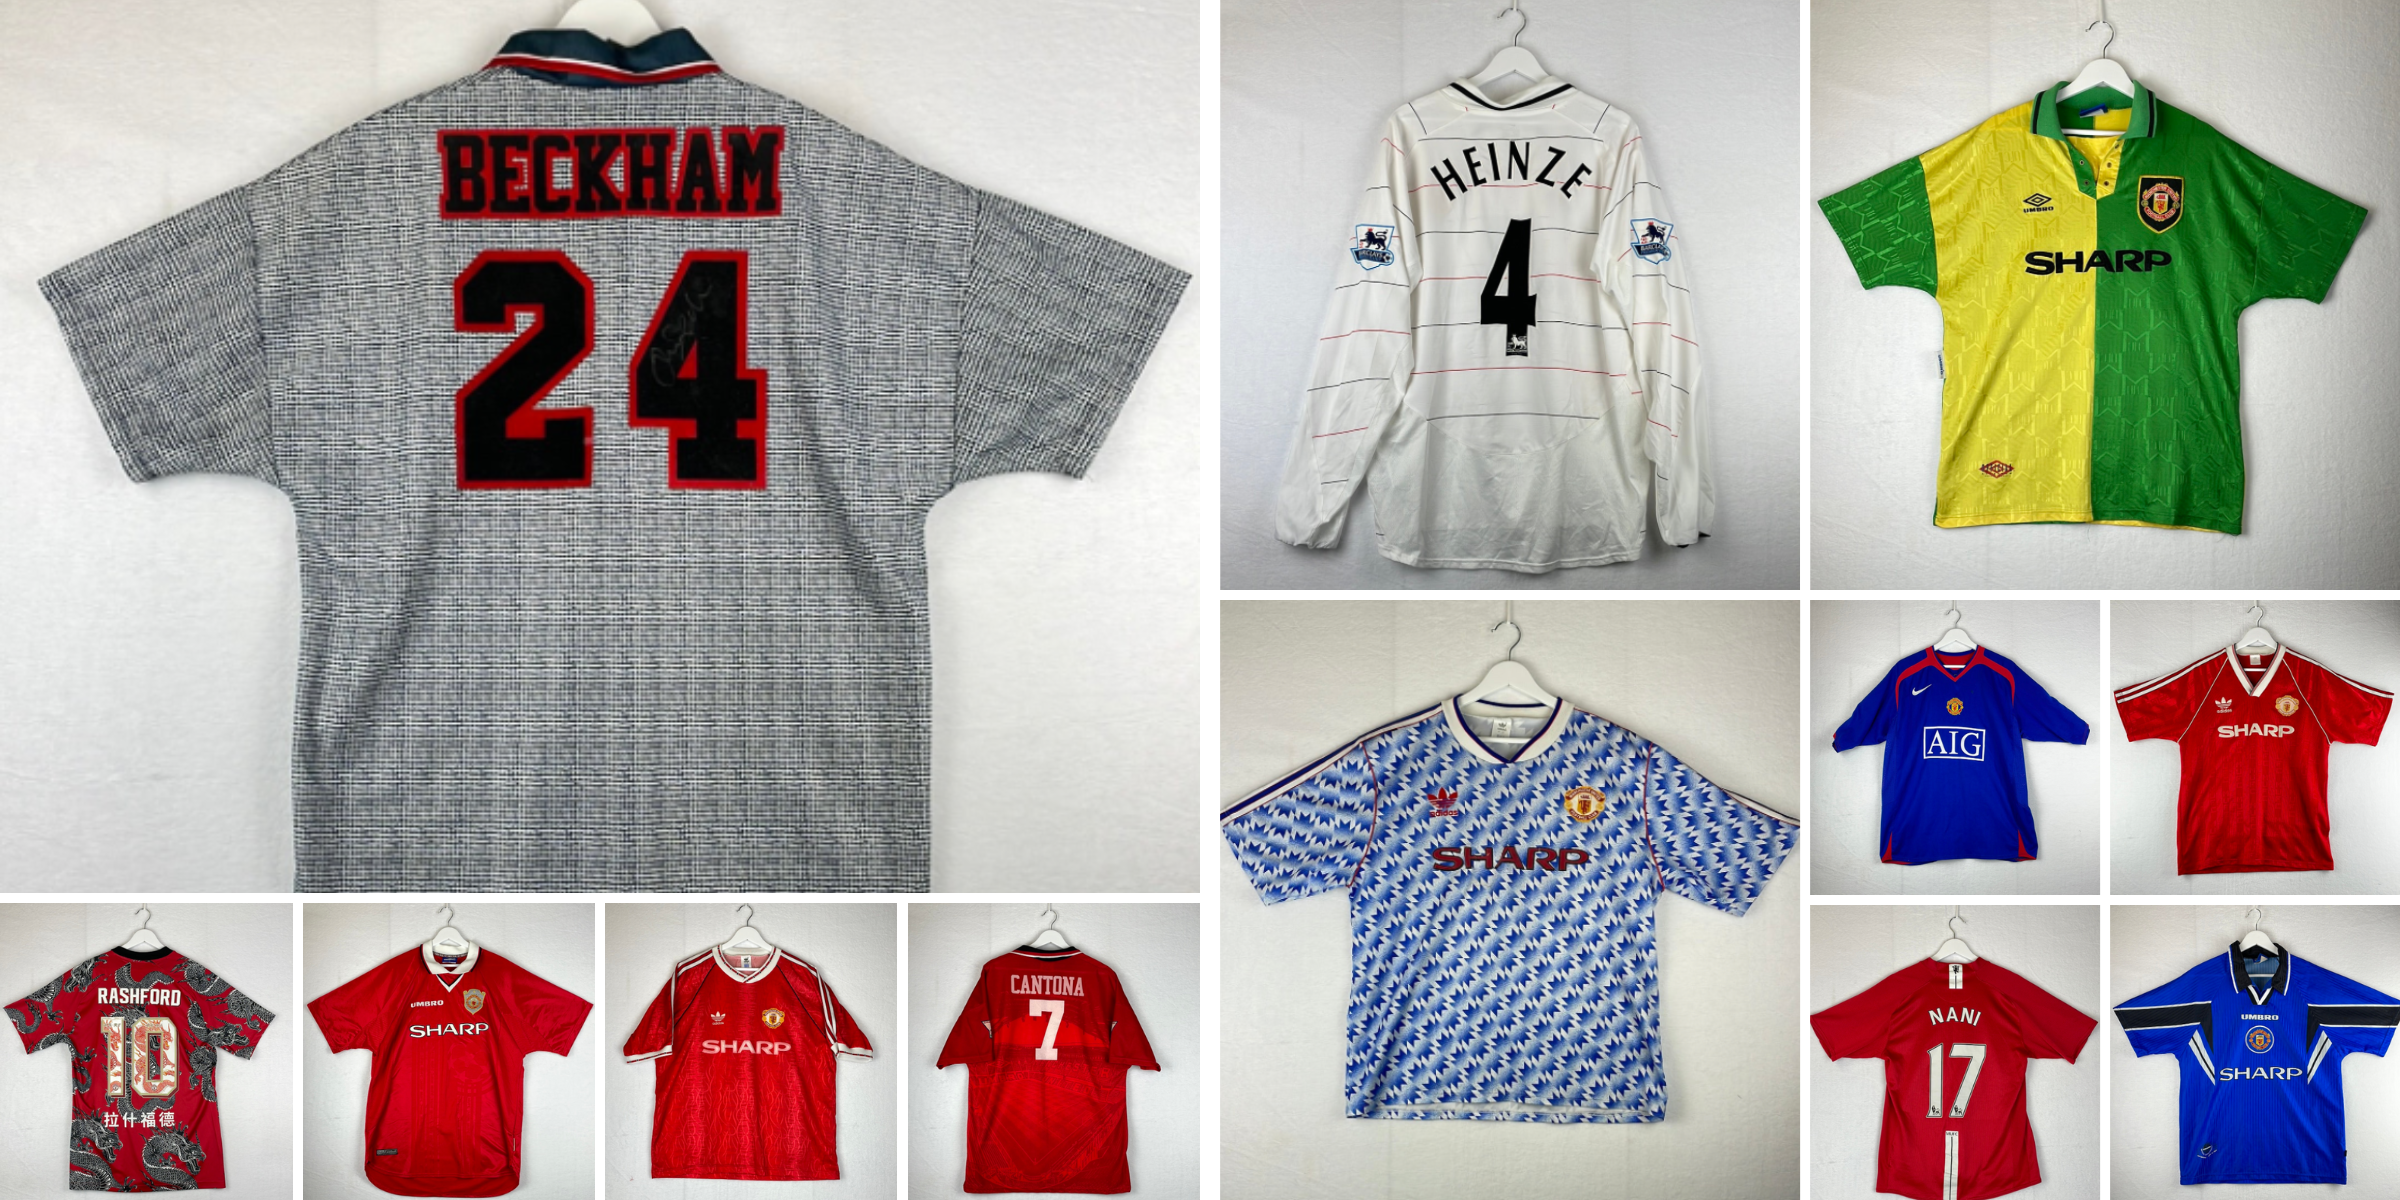 1998 Manchester United Home retro kit - Vintage Football Shop